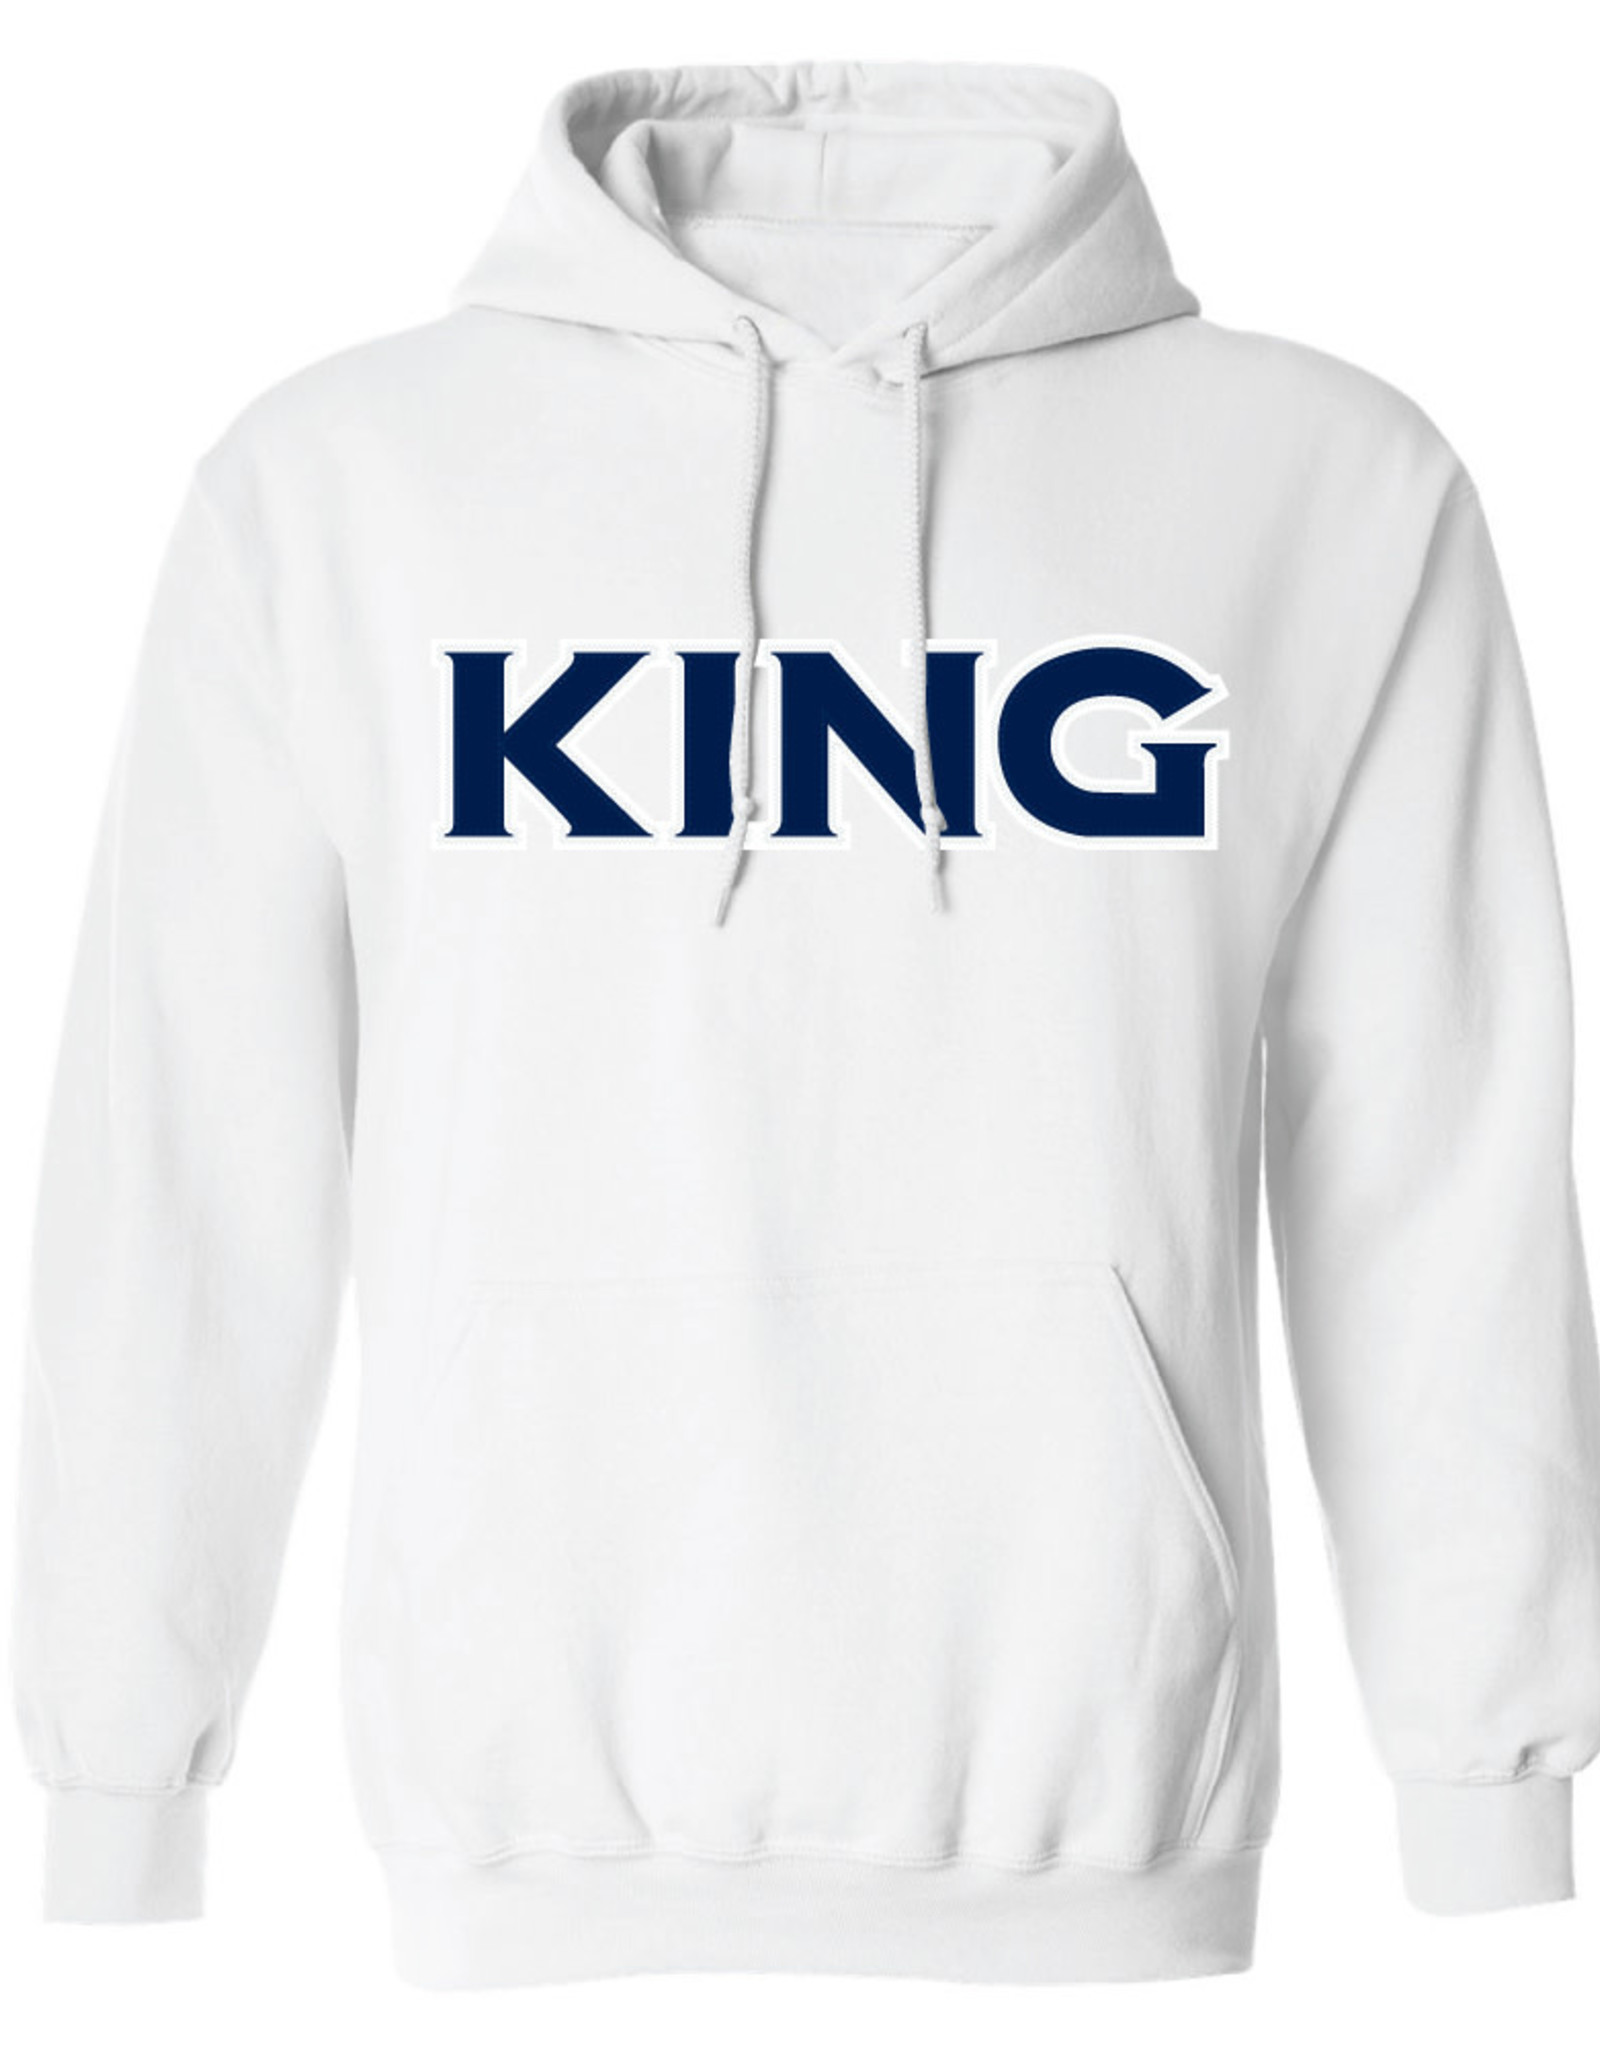 ES Sports King sweatshirt - white